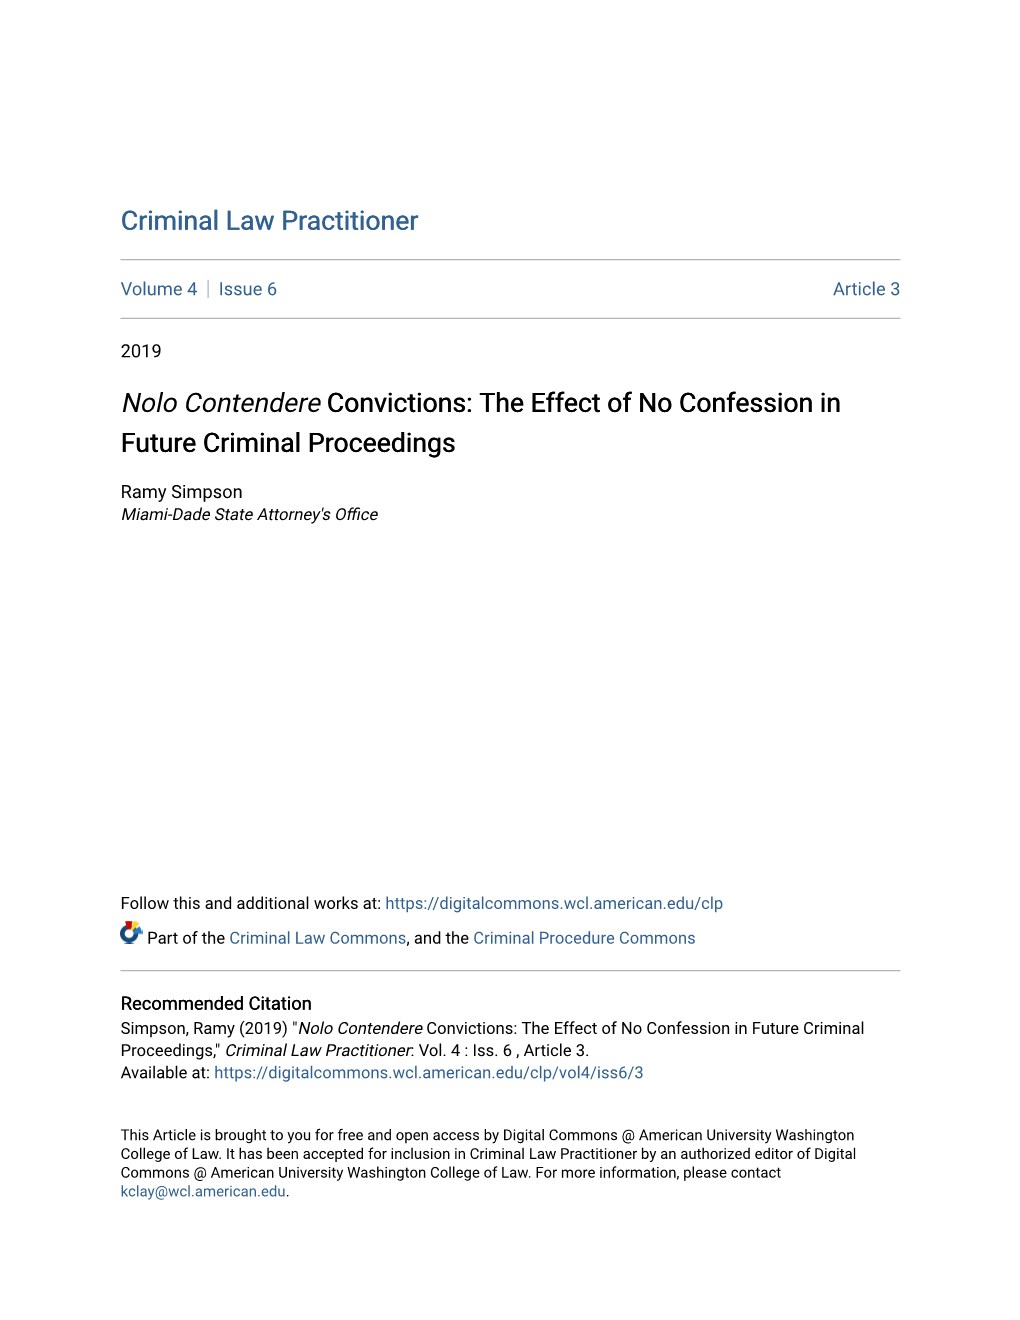 Nolo Contendere Convictions: the Effect of No Confession in Future Criminal Proceedings